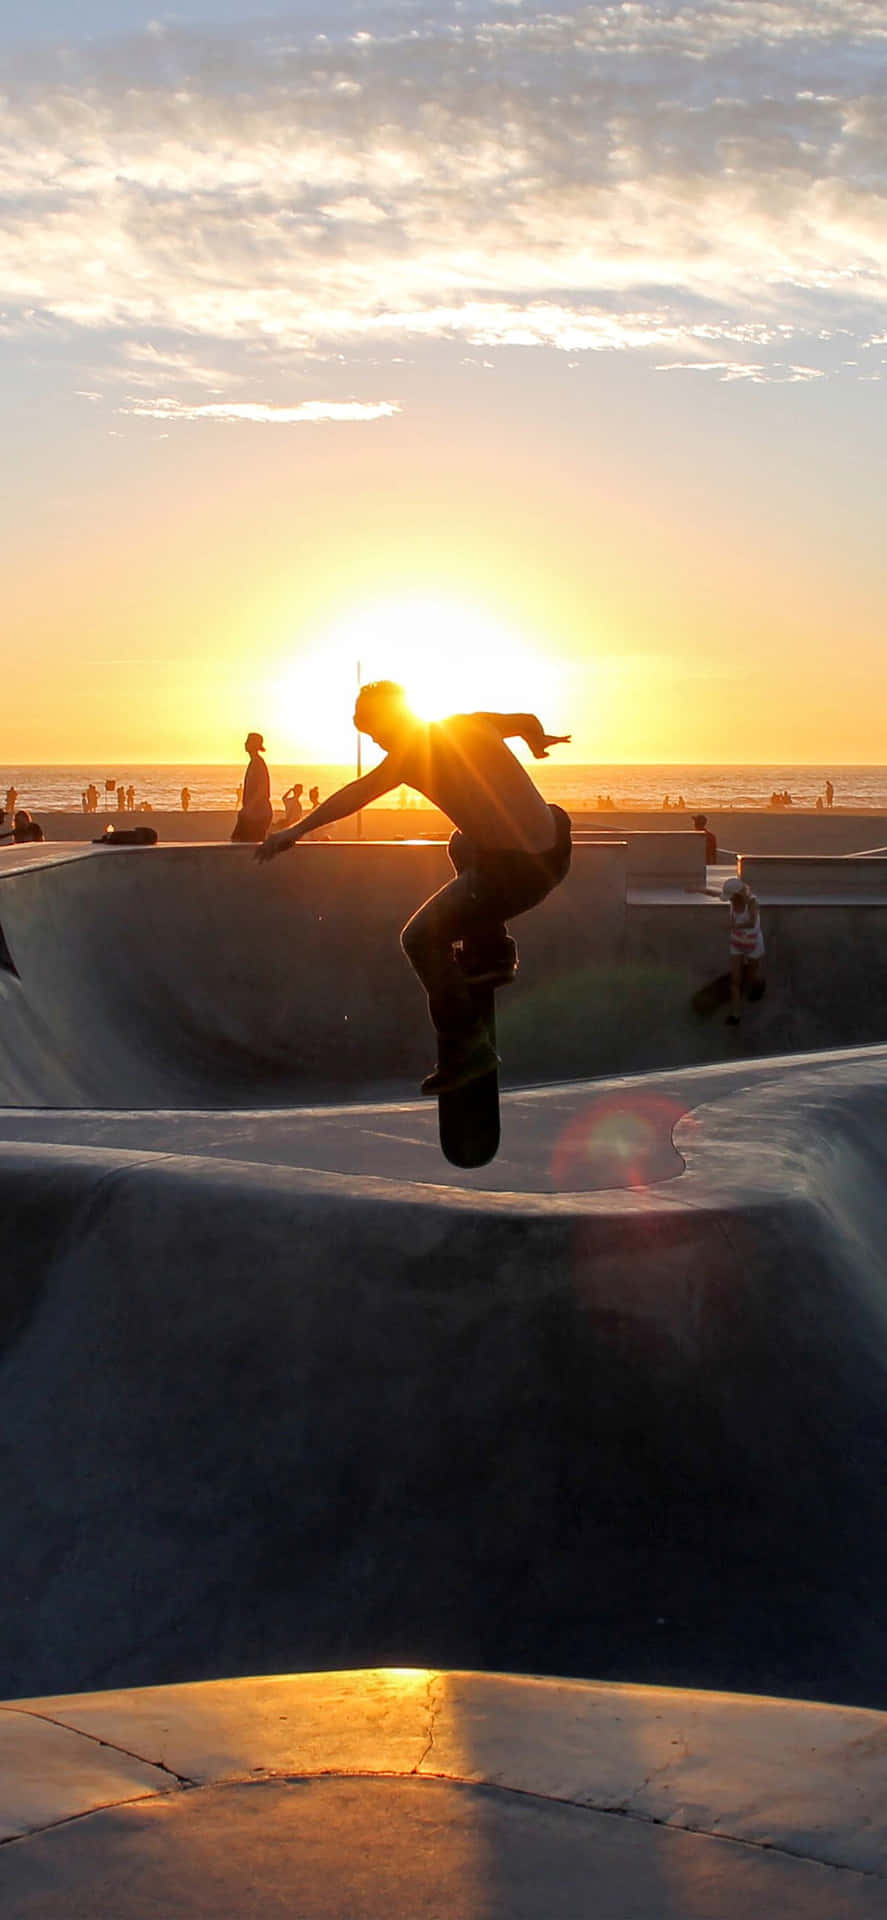 Caption: Epic Skateboard Jump In Skate Park